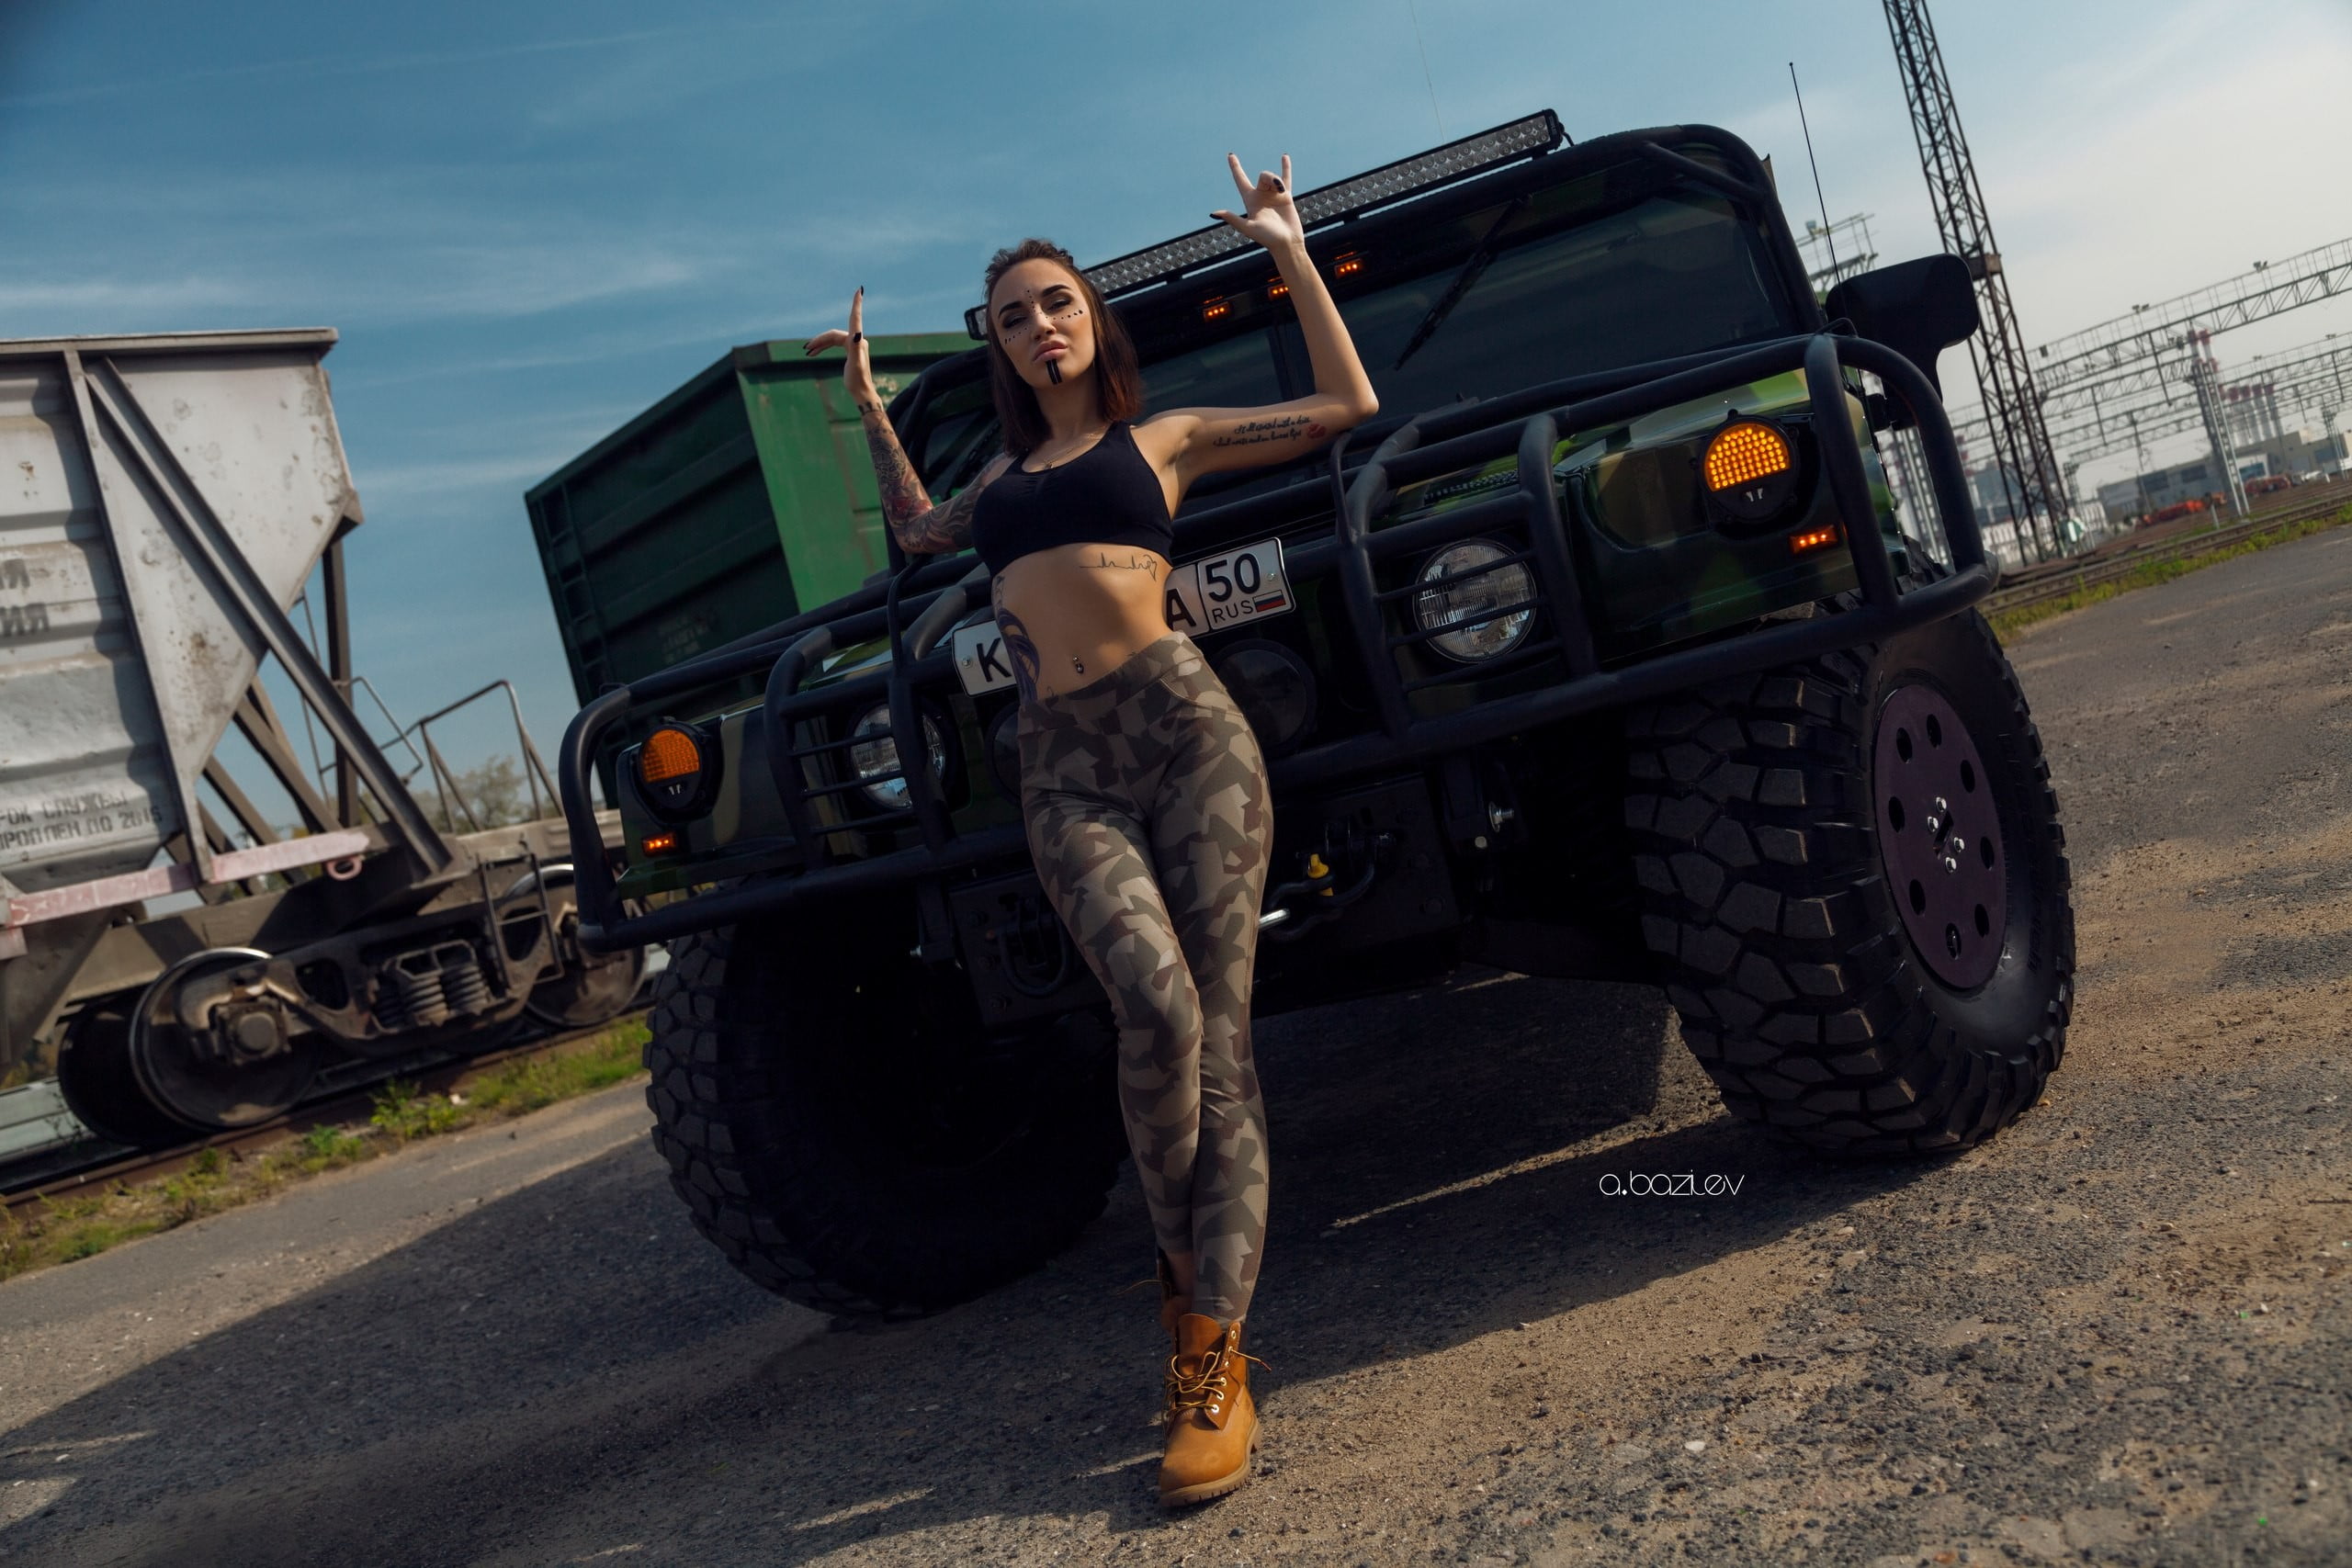 women's grey tights, Katerina Kas, model, women with cars, women outdoors